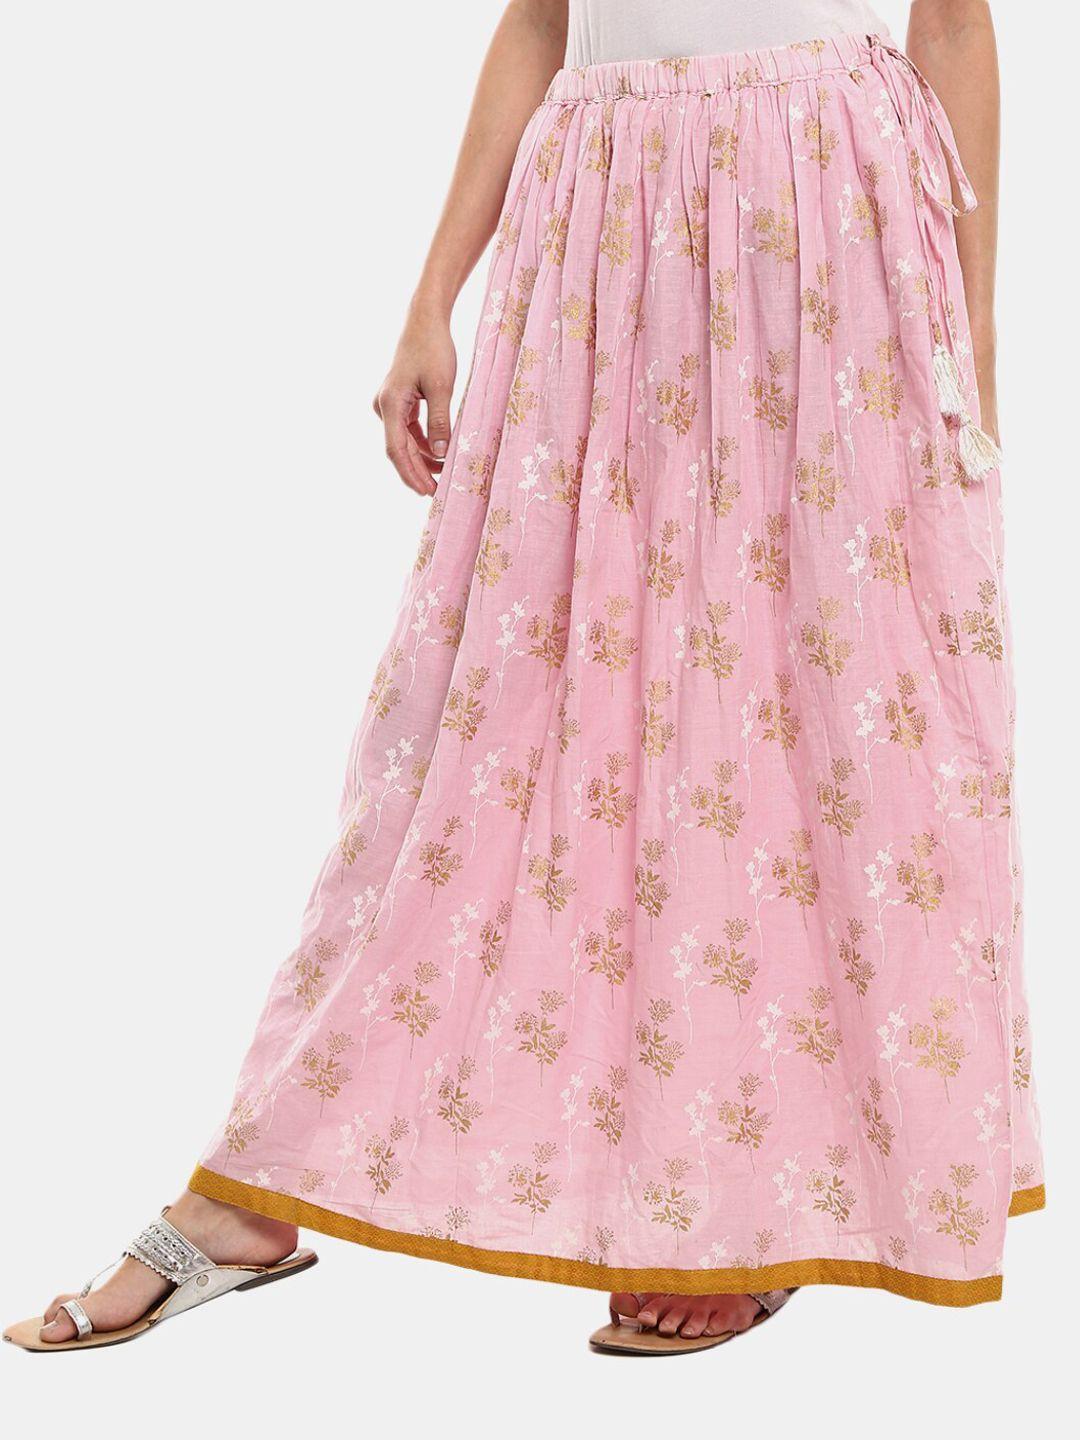 v-mart women pink floral printed flared maxi skirts